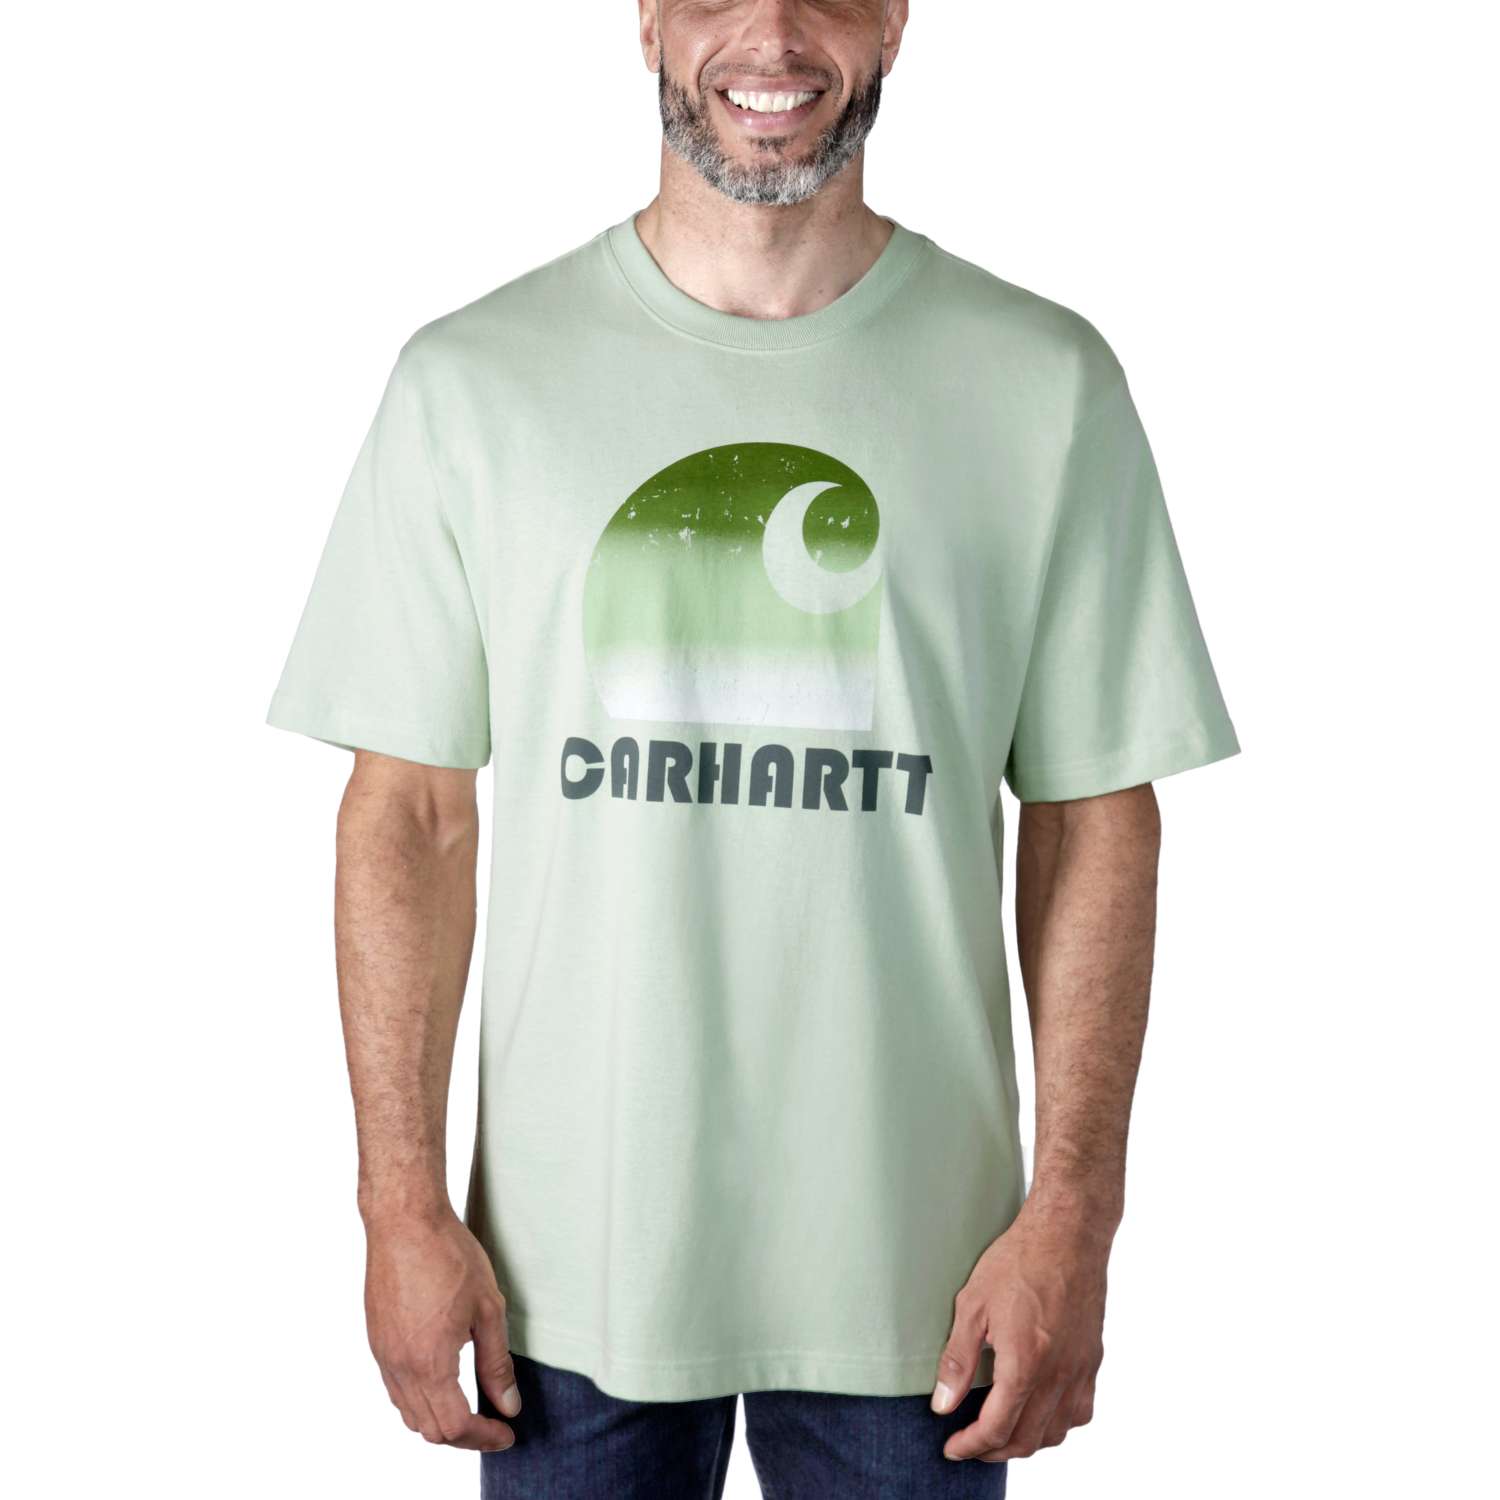 carhartt® Herren-T-Shirt »HEAVY S/S C GRAPHIC T-SHIRT« - Gr. L, tender greens - direkt von HUG Technik ✓